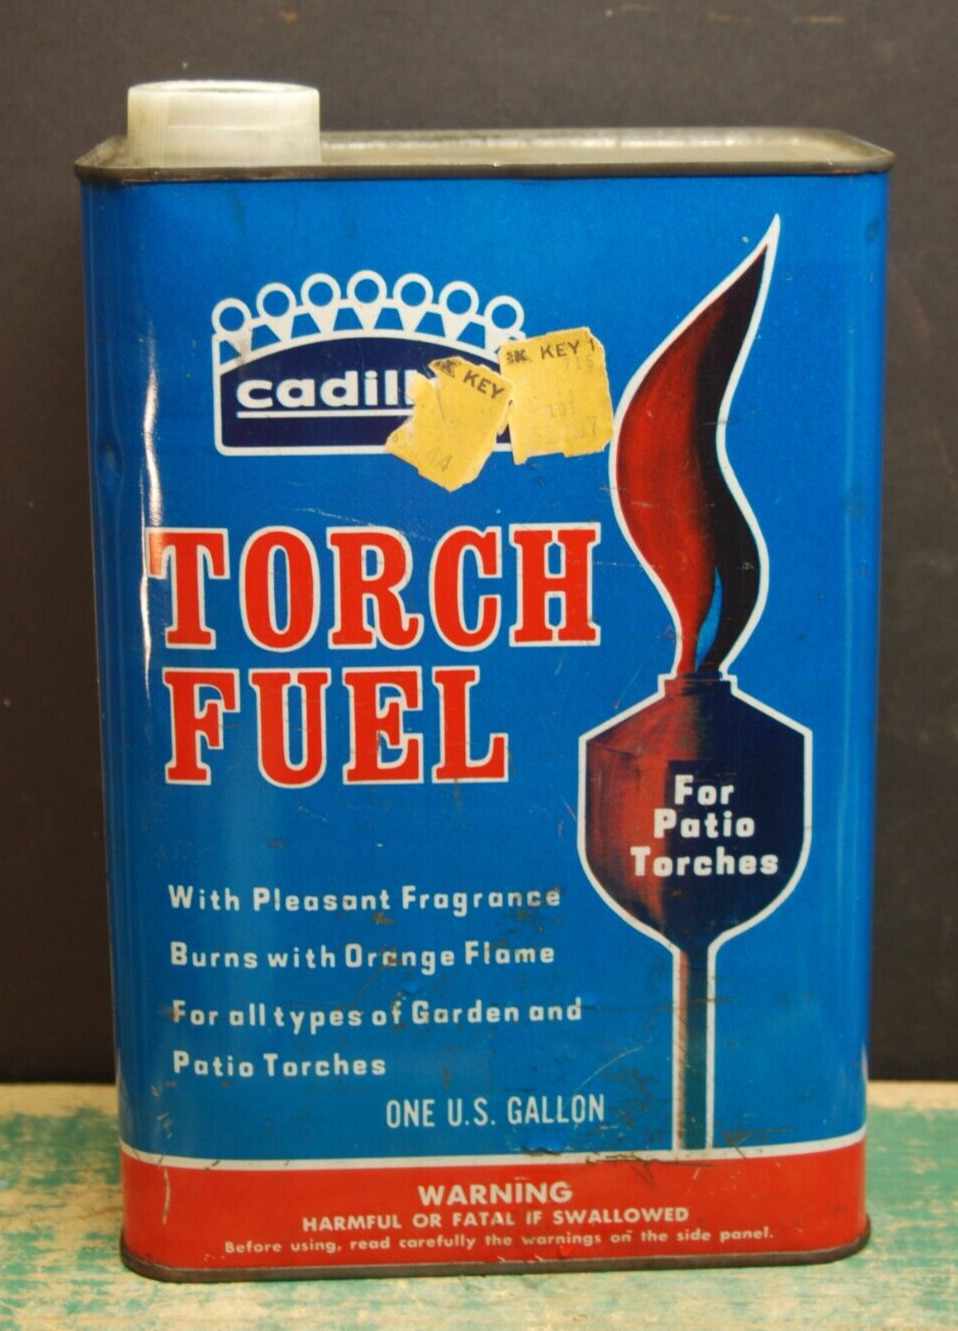 VINTAGE CADILLAC OIL COMPANY Patio Torch Fuel 1 Gallon can